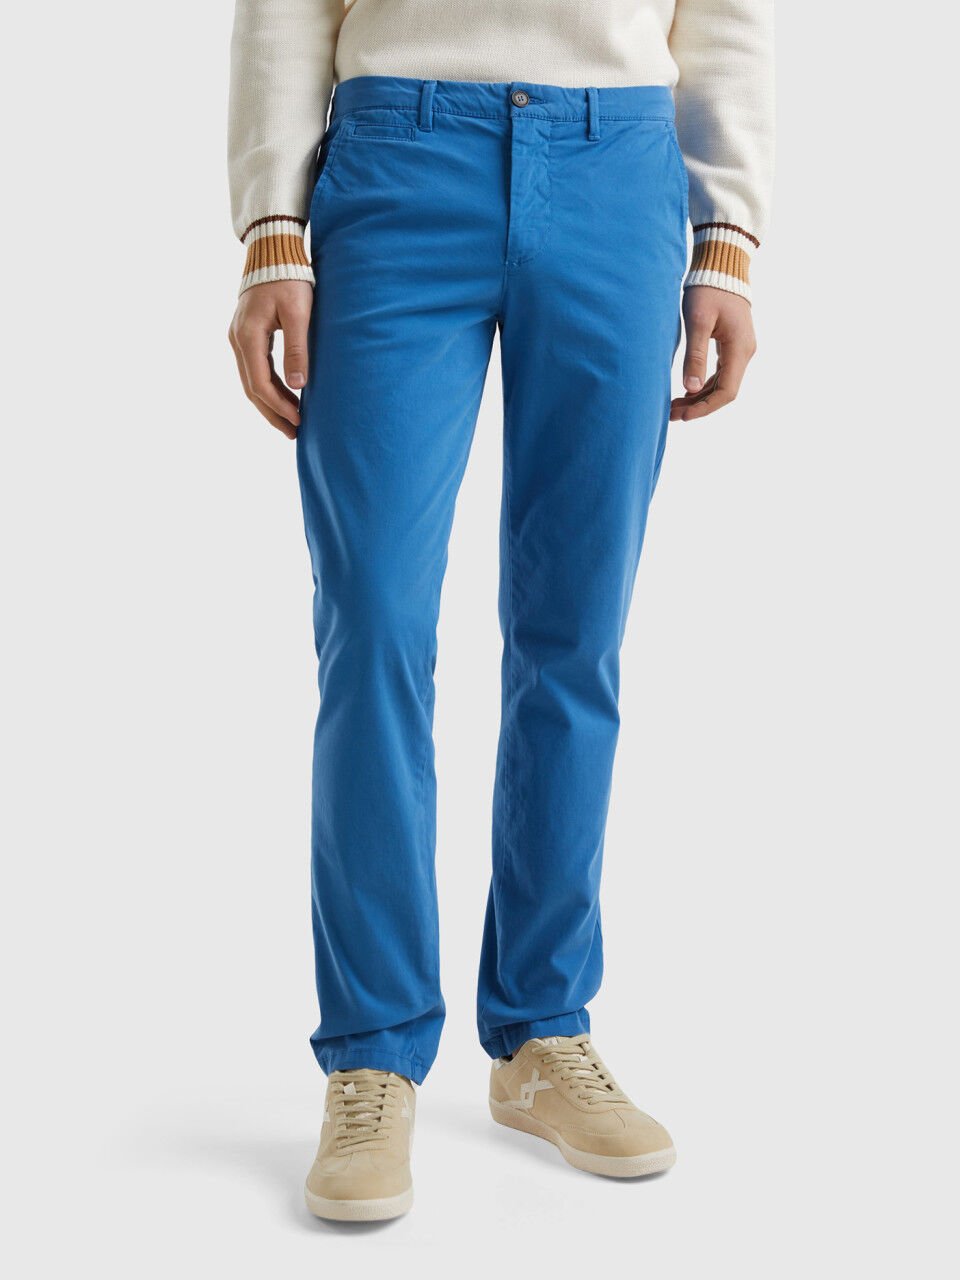 Hugo Boss Casual Pants Mens 32x33 Blue Chino India | Ubuy